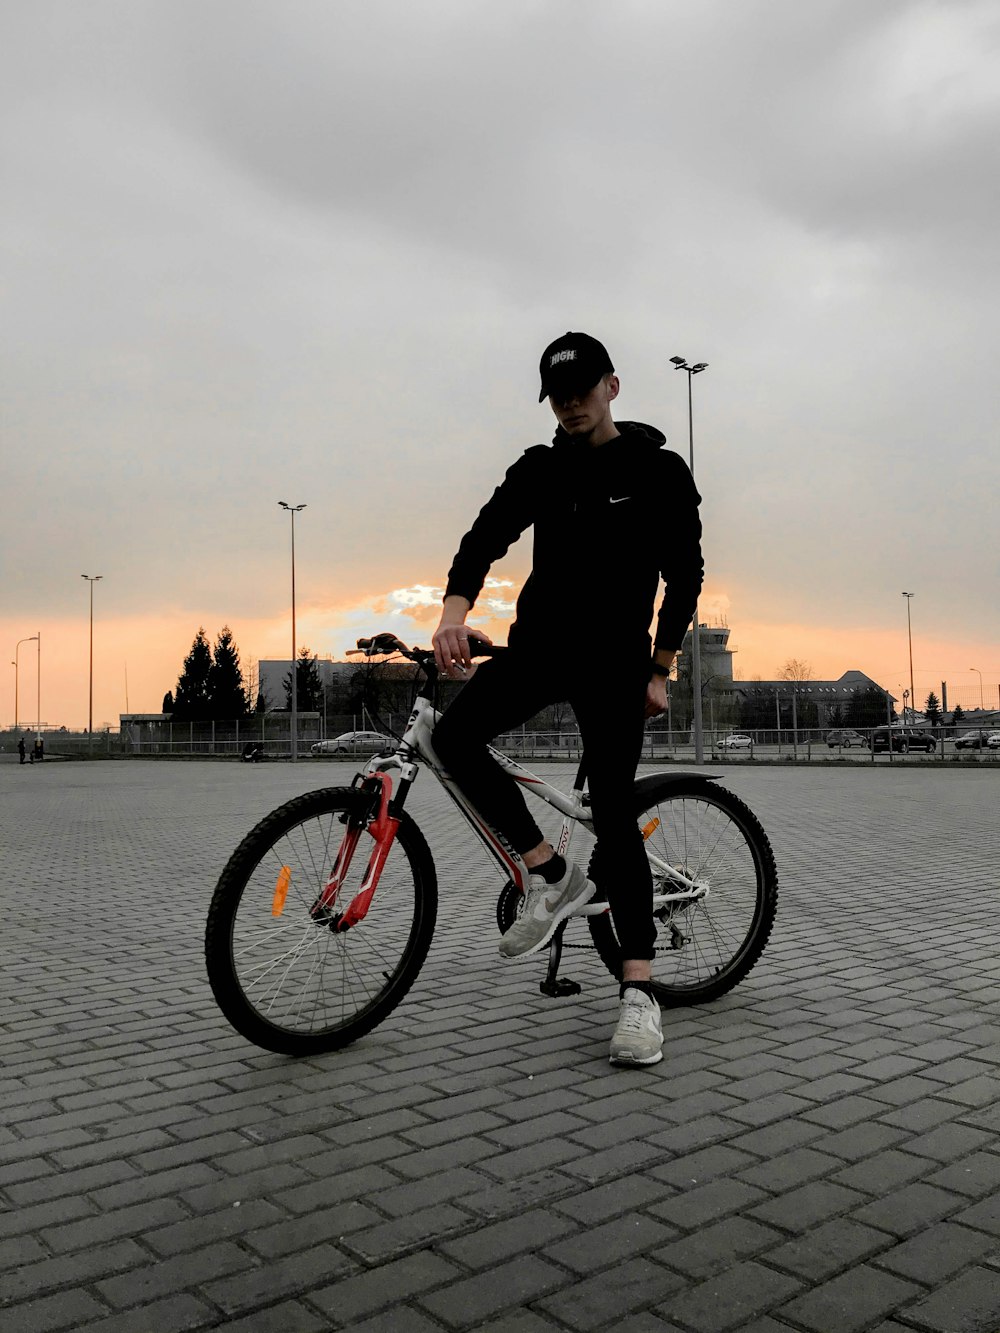 man in black jacket riding bicycle on gray pavement during daytime